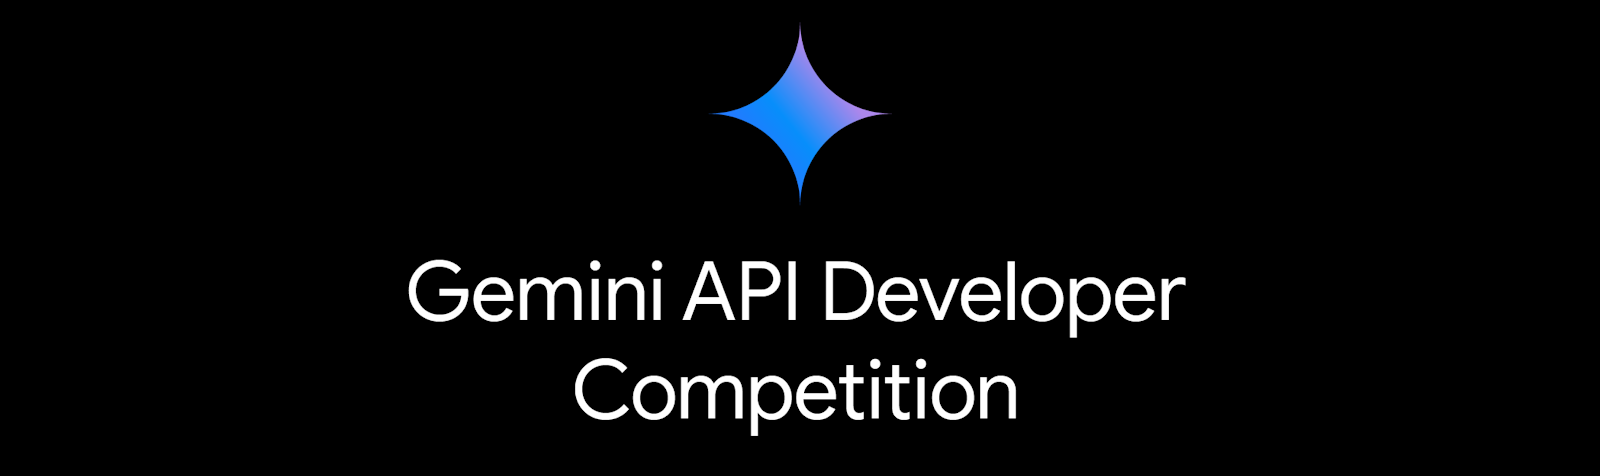 Gemini-API-Developer-Competition-Banner